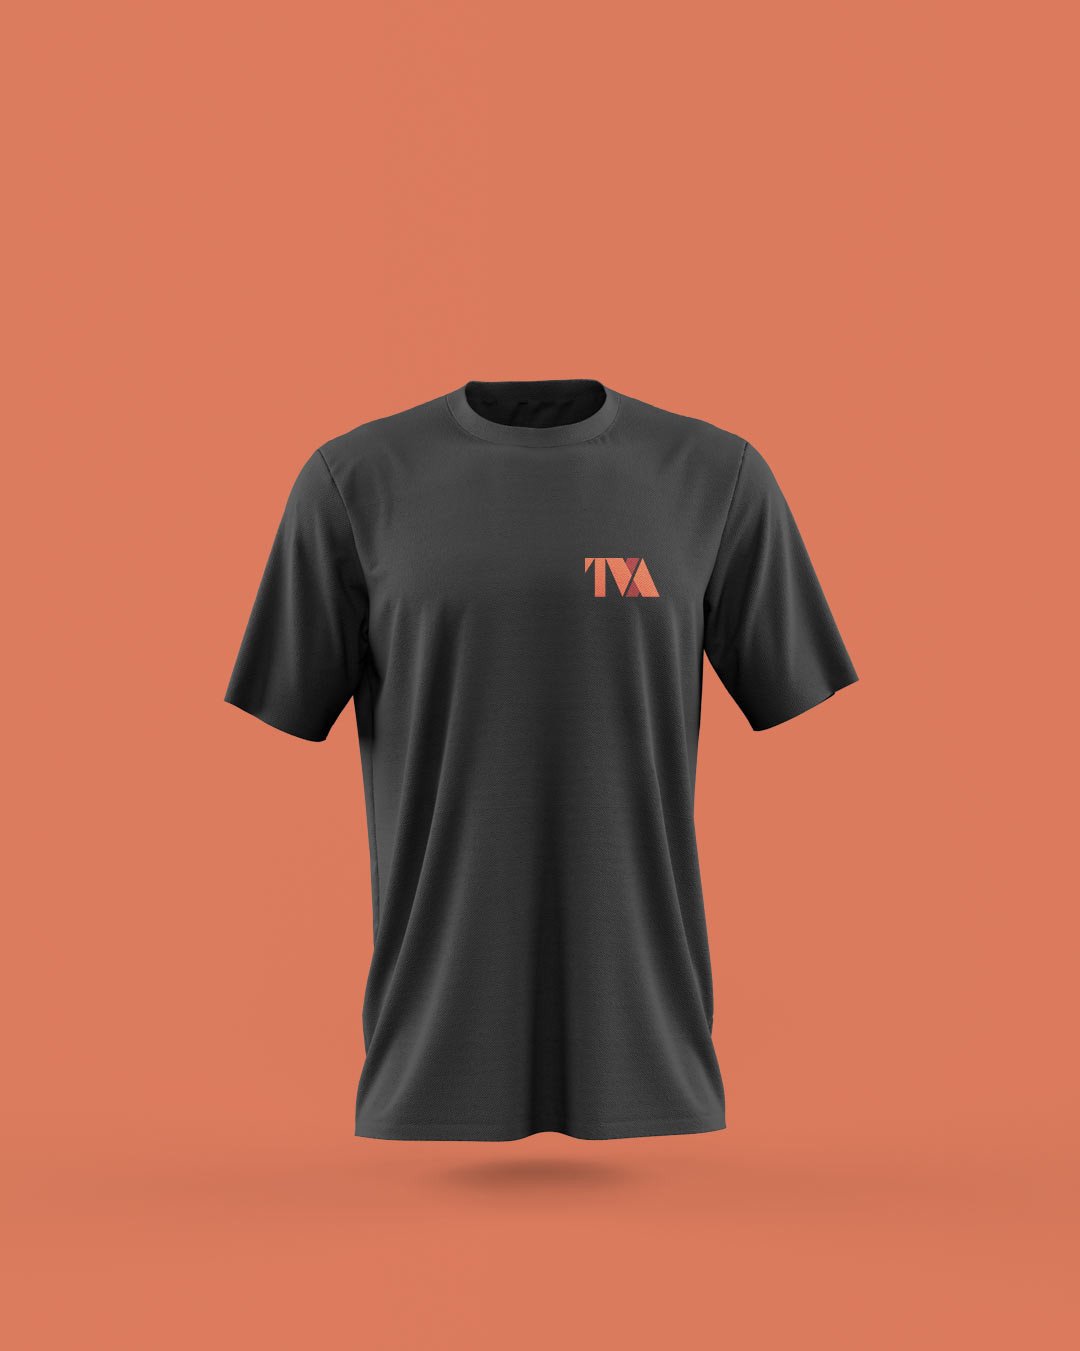 TeesWarrior TVA Variant Marvel T-shirts Graphic Printed 100% Cotton T-Shirt - Regular Fit, Round Neck, Half Sleeves